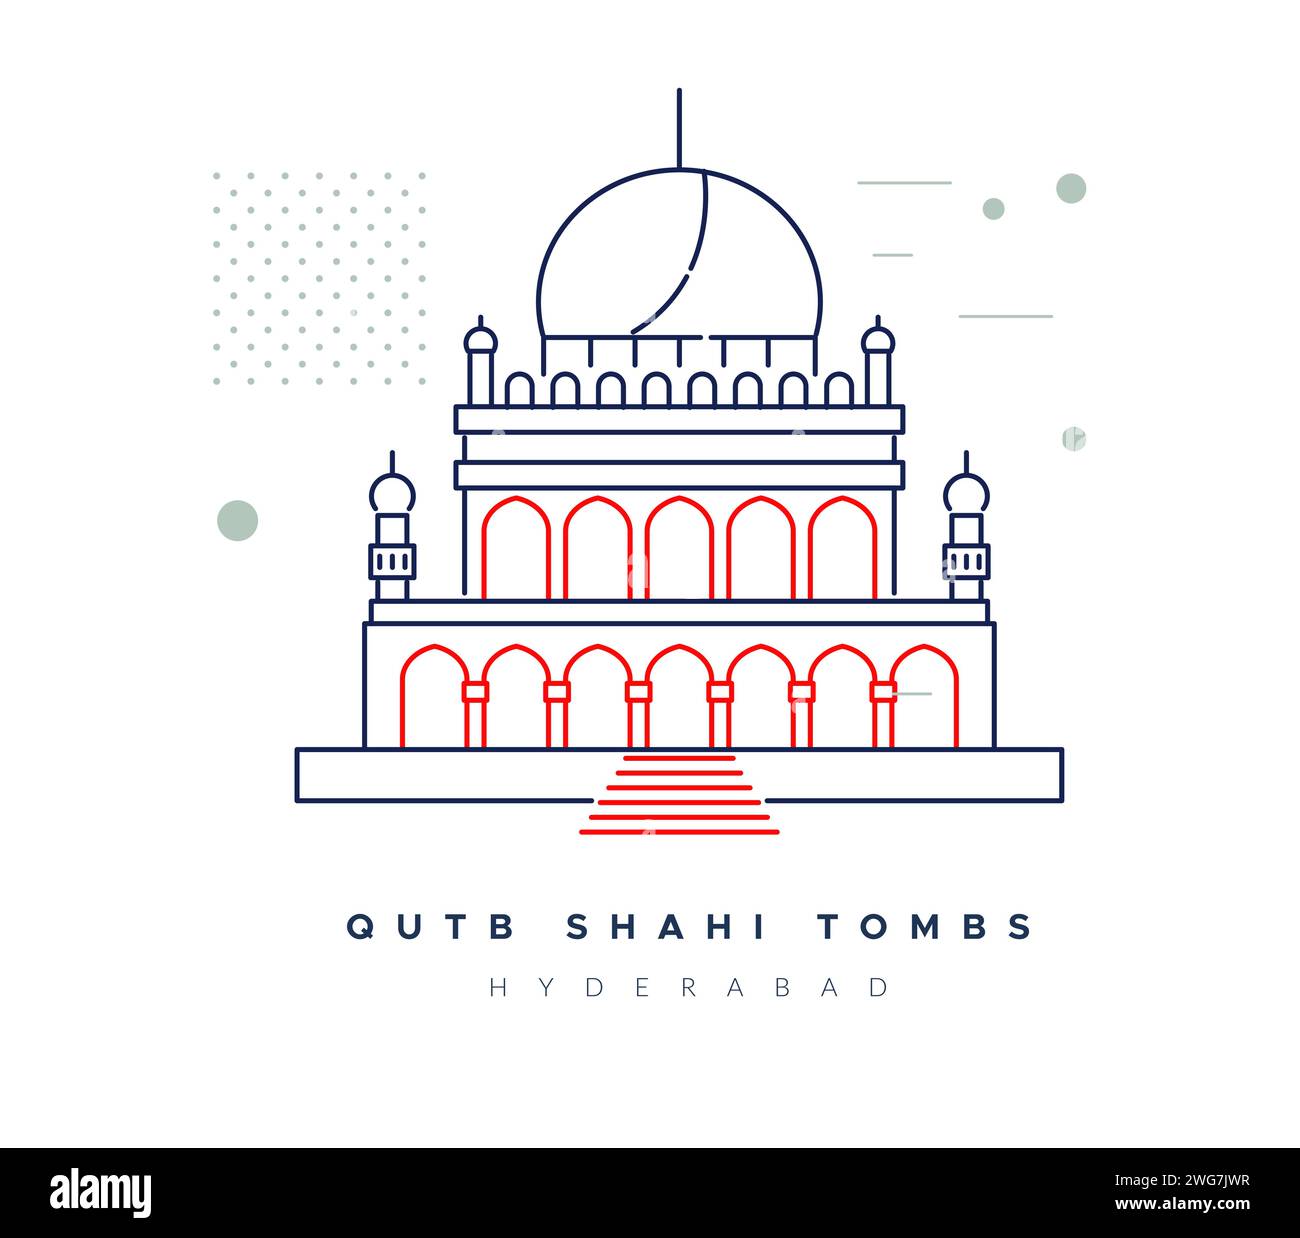 Qutb Shahi Tombs - Ibrahim Bagh - Hyderabad - Stock Illustration as EPS 10 File Stock Vector